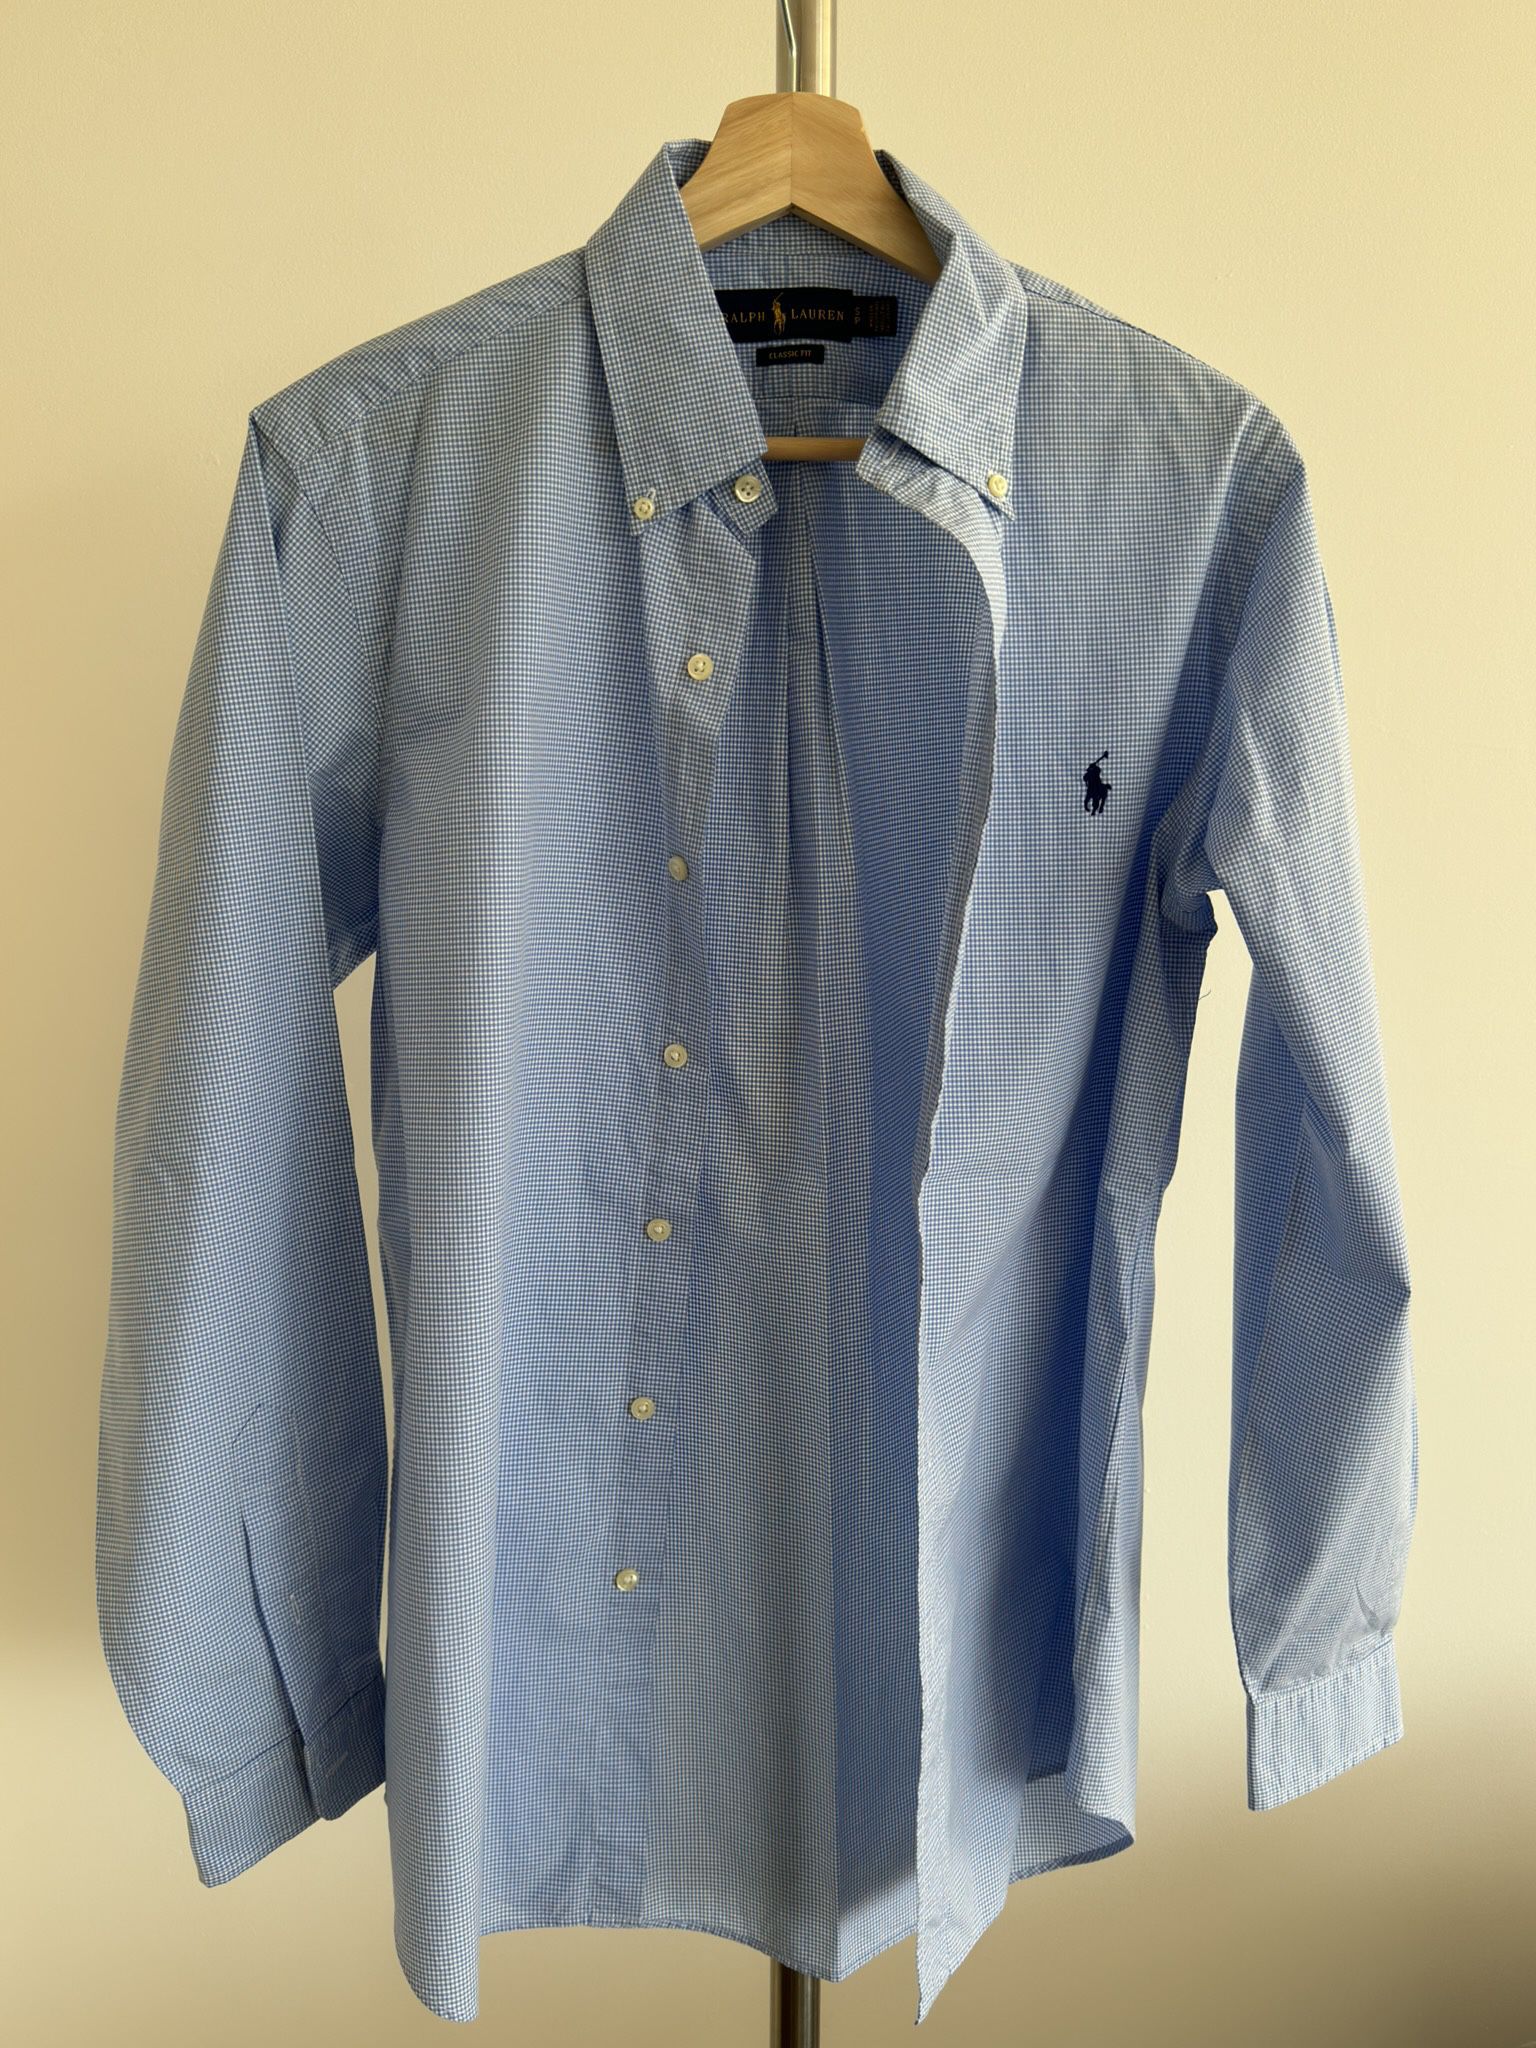 Men’s Gingham Shirt - Ralph Lauren - Size S